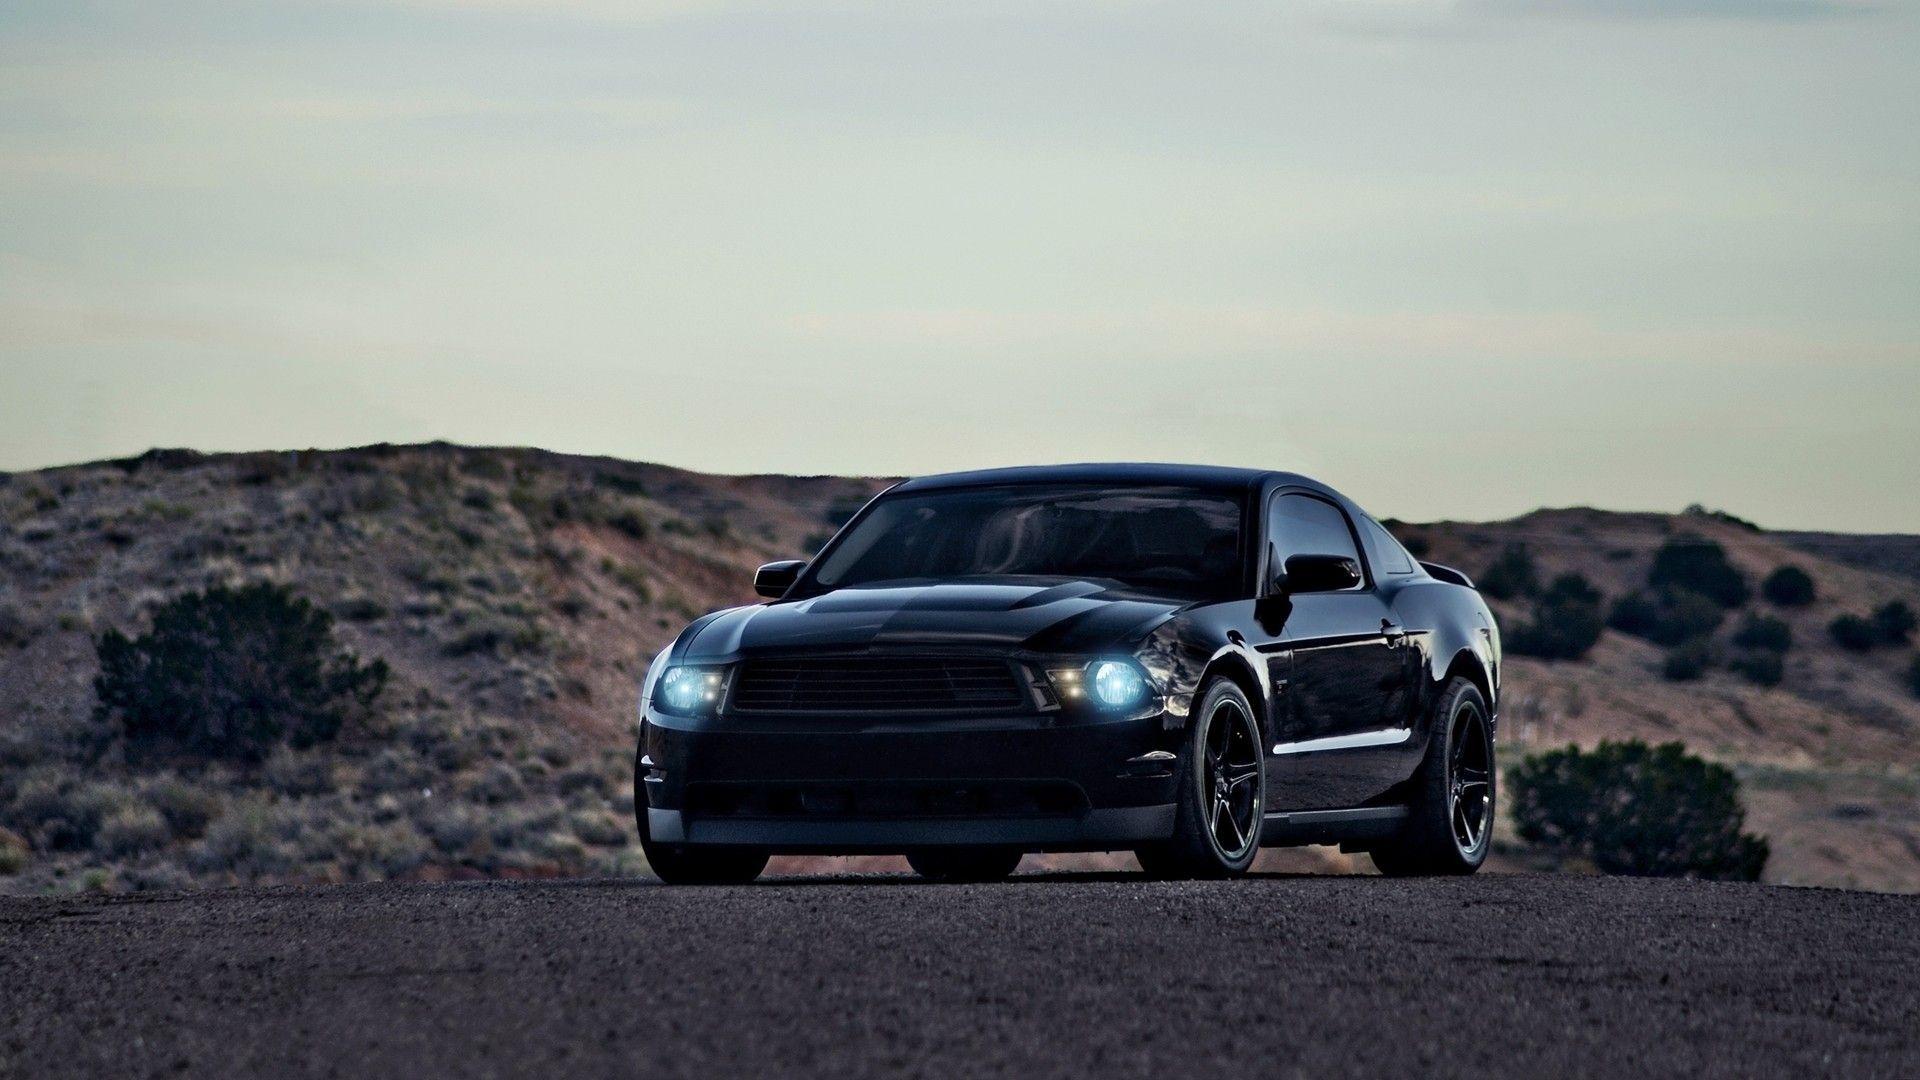 Black Mustang GT Wallpaper